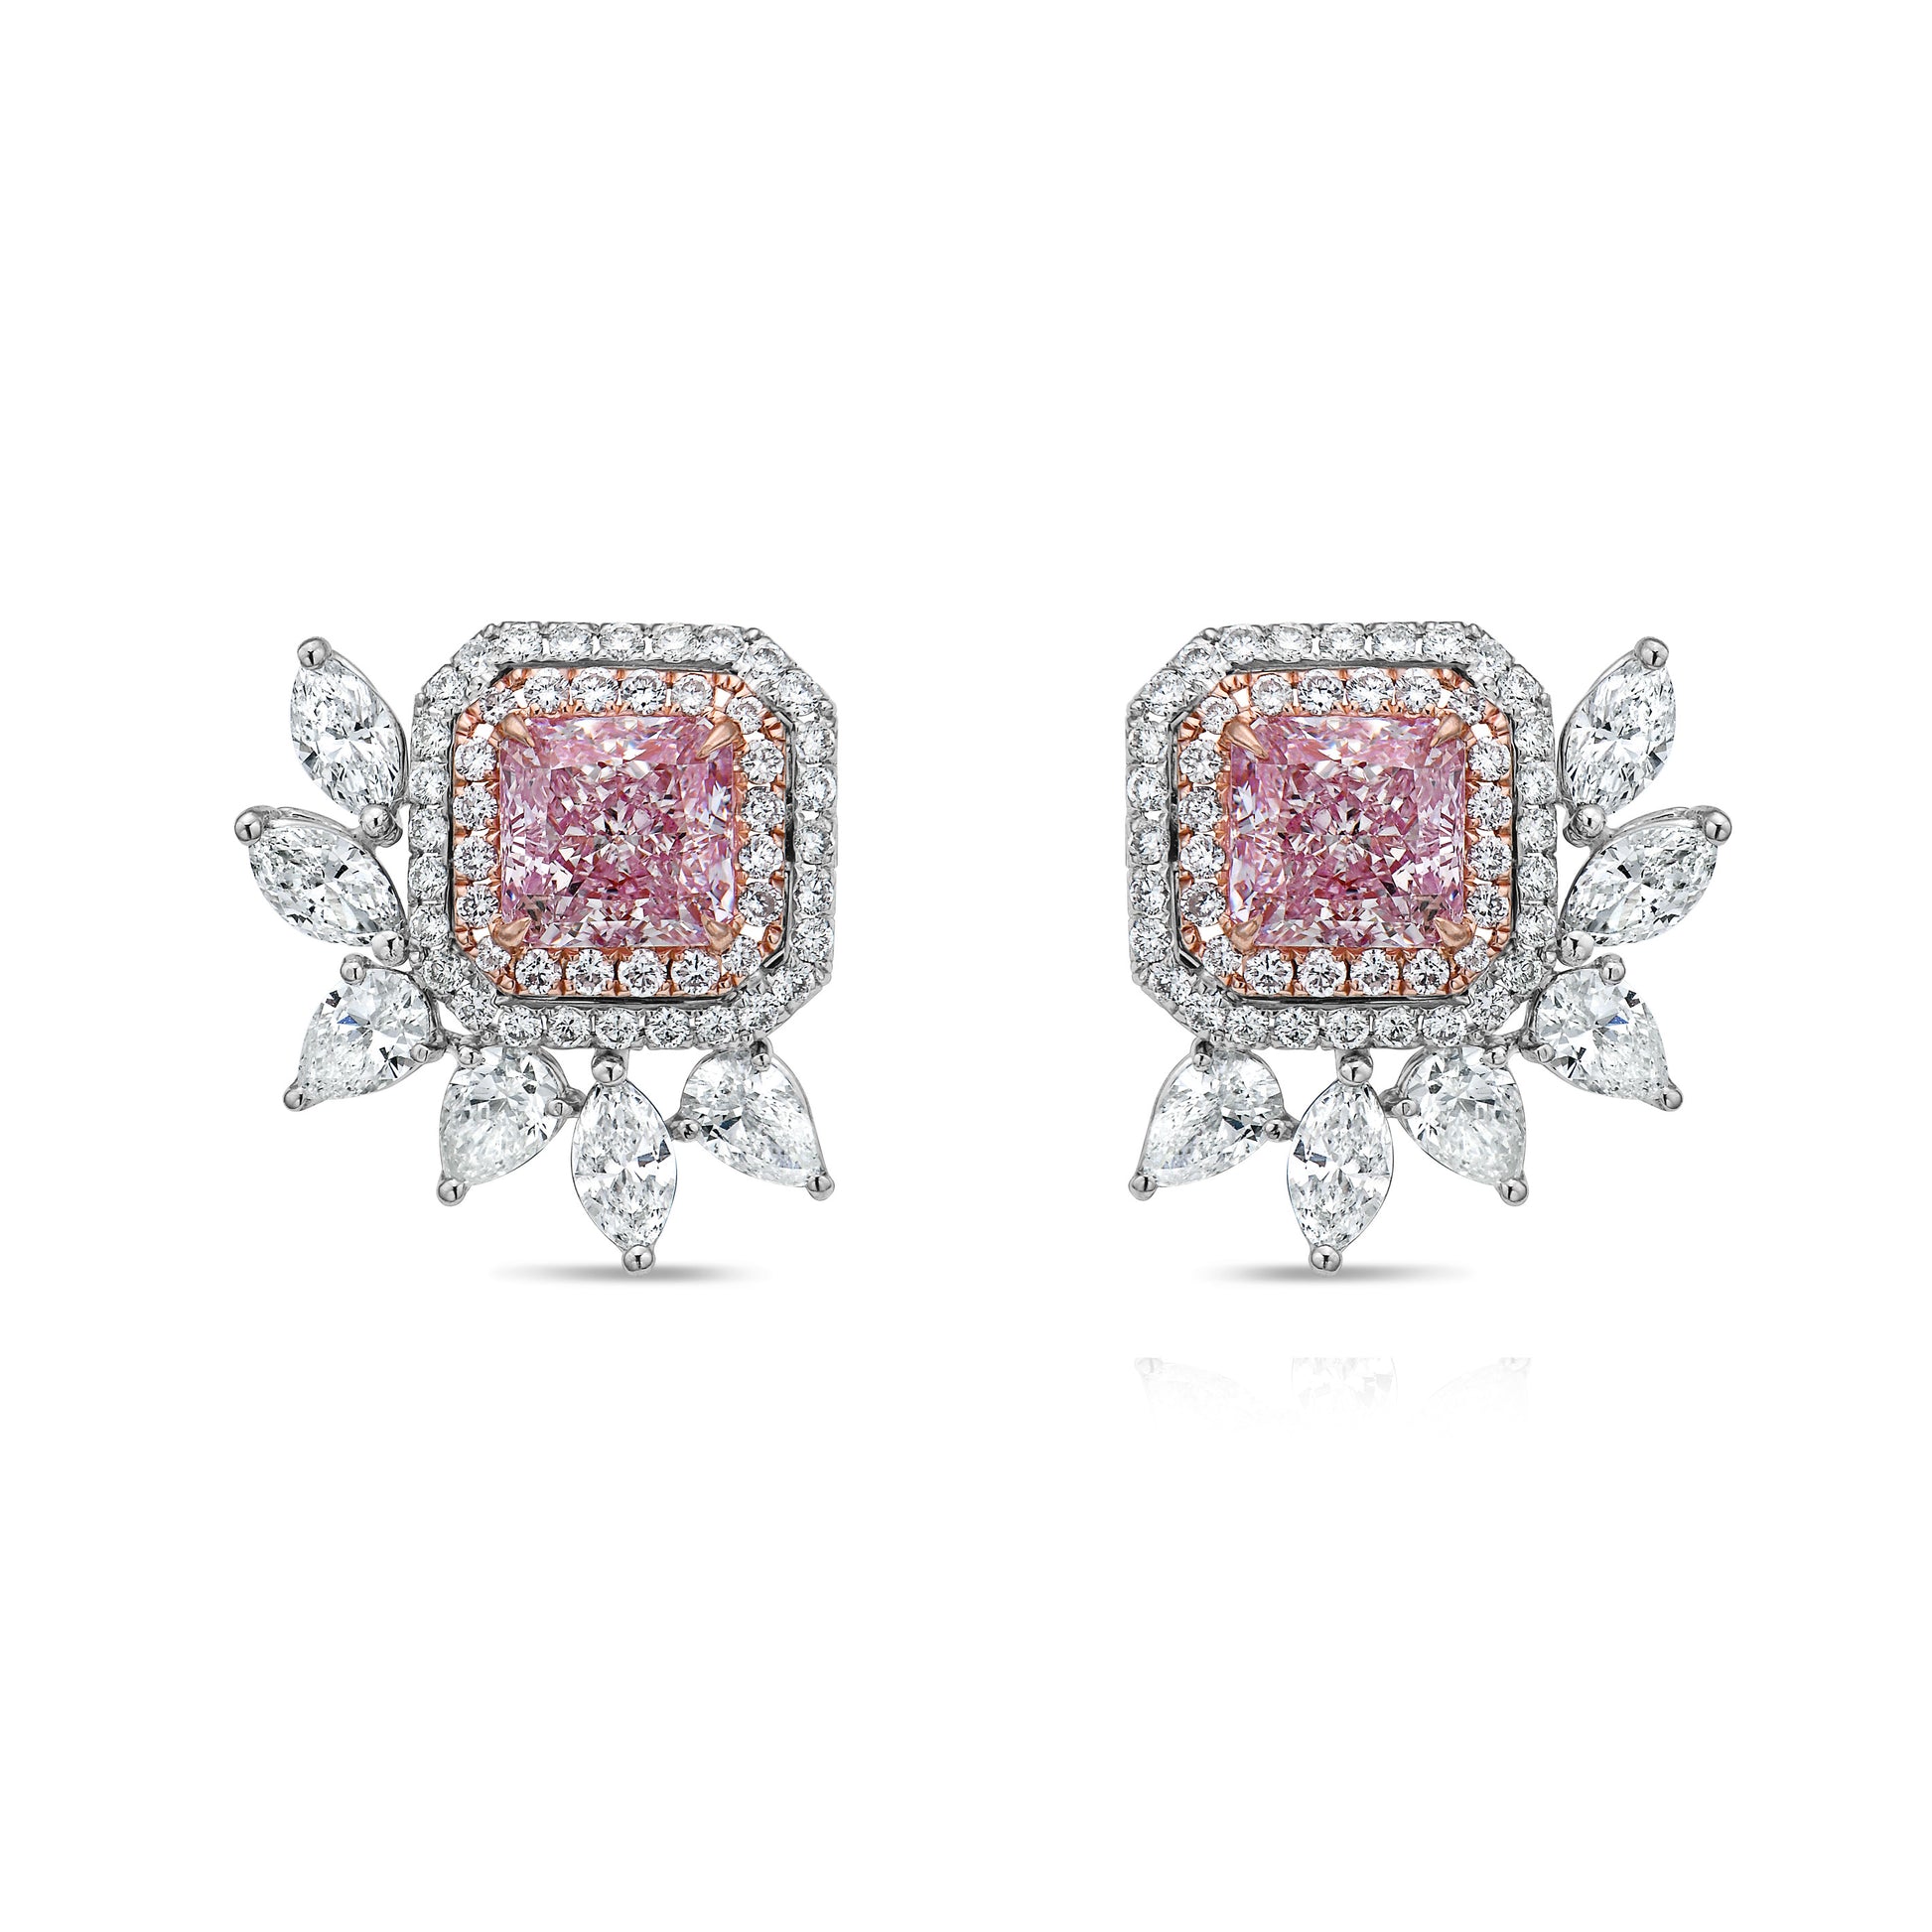 Pink diamond earrings. Pink Diamond studs. Pink diamond stud earrings. pink diamond jewelry.